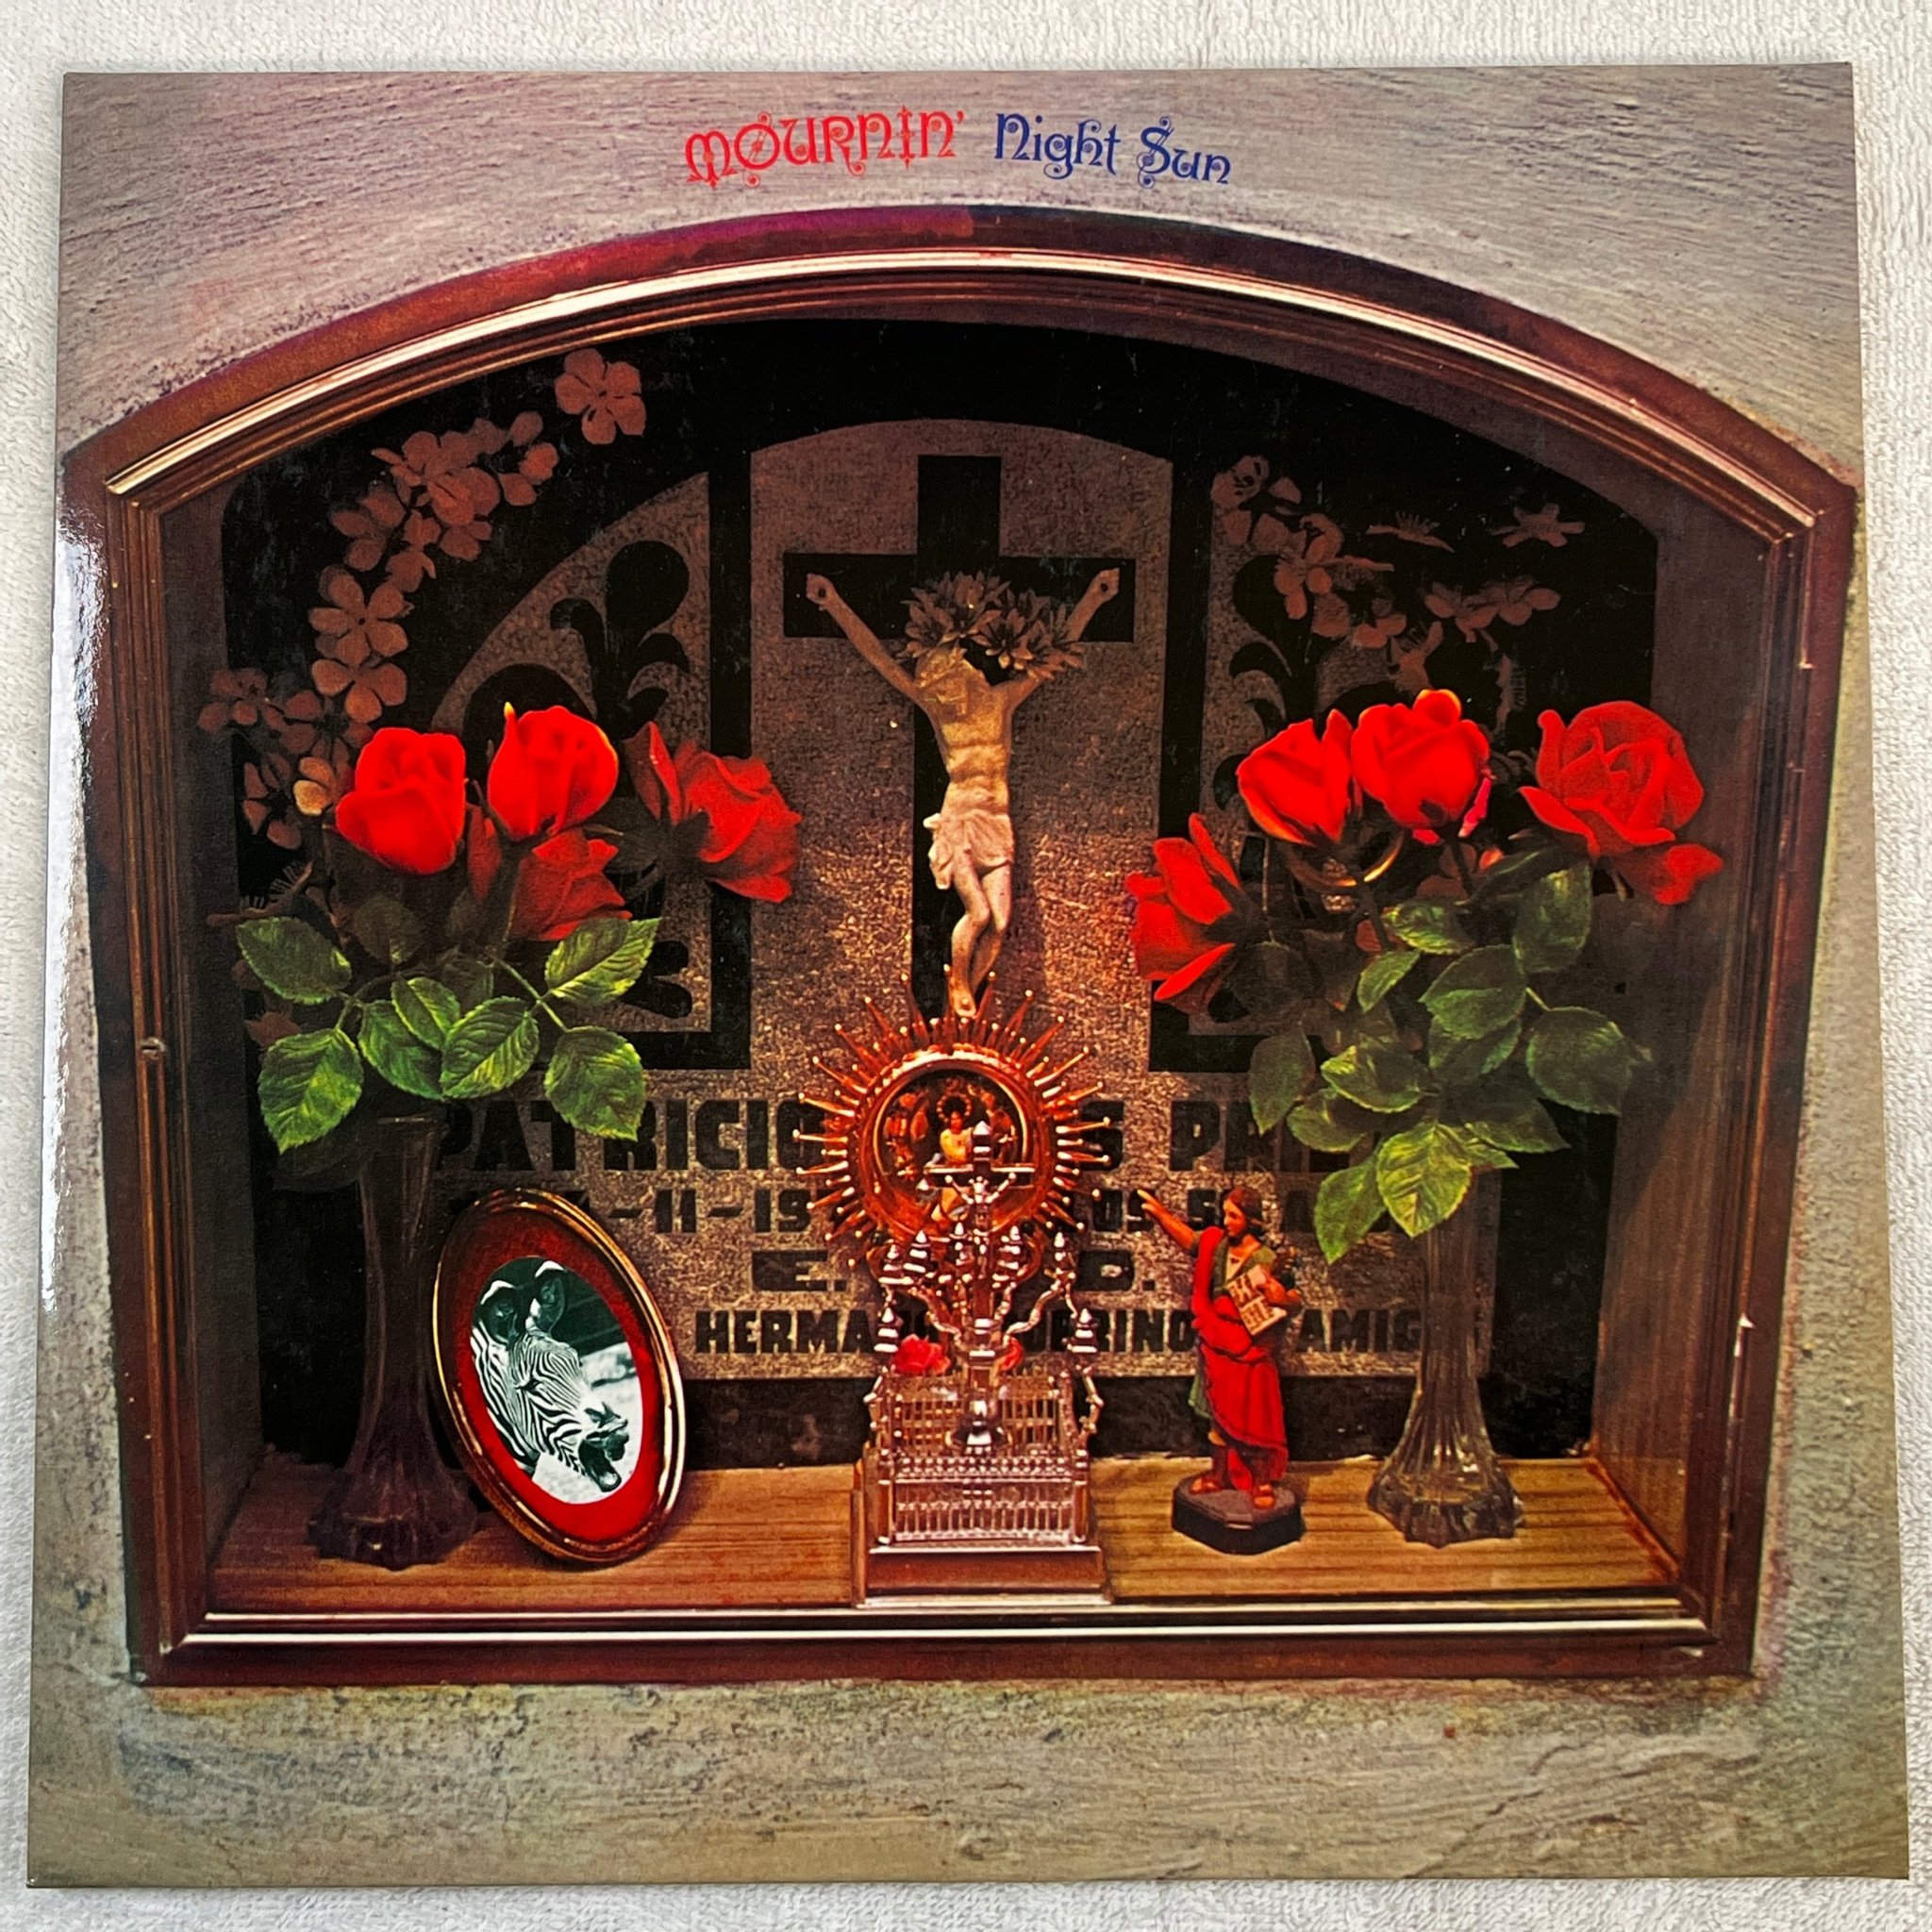 Omslagsbild för skivan NIGHT SUN mournin' LP re -72/2001 Ger SECOND BATTLE SB LP 041 kraut masterpiece 